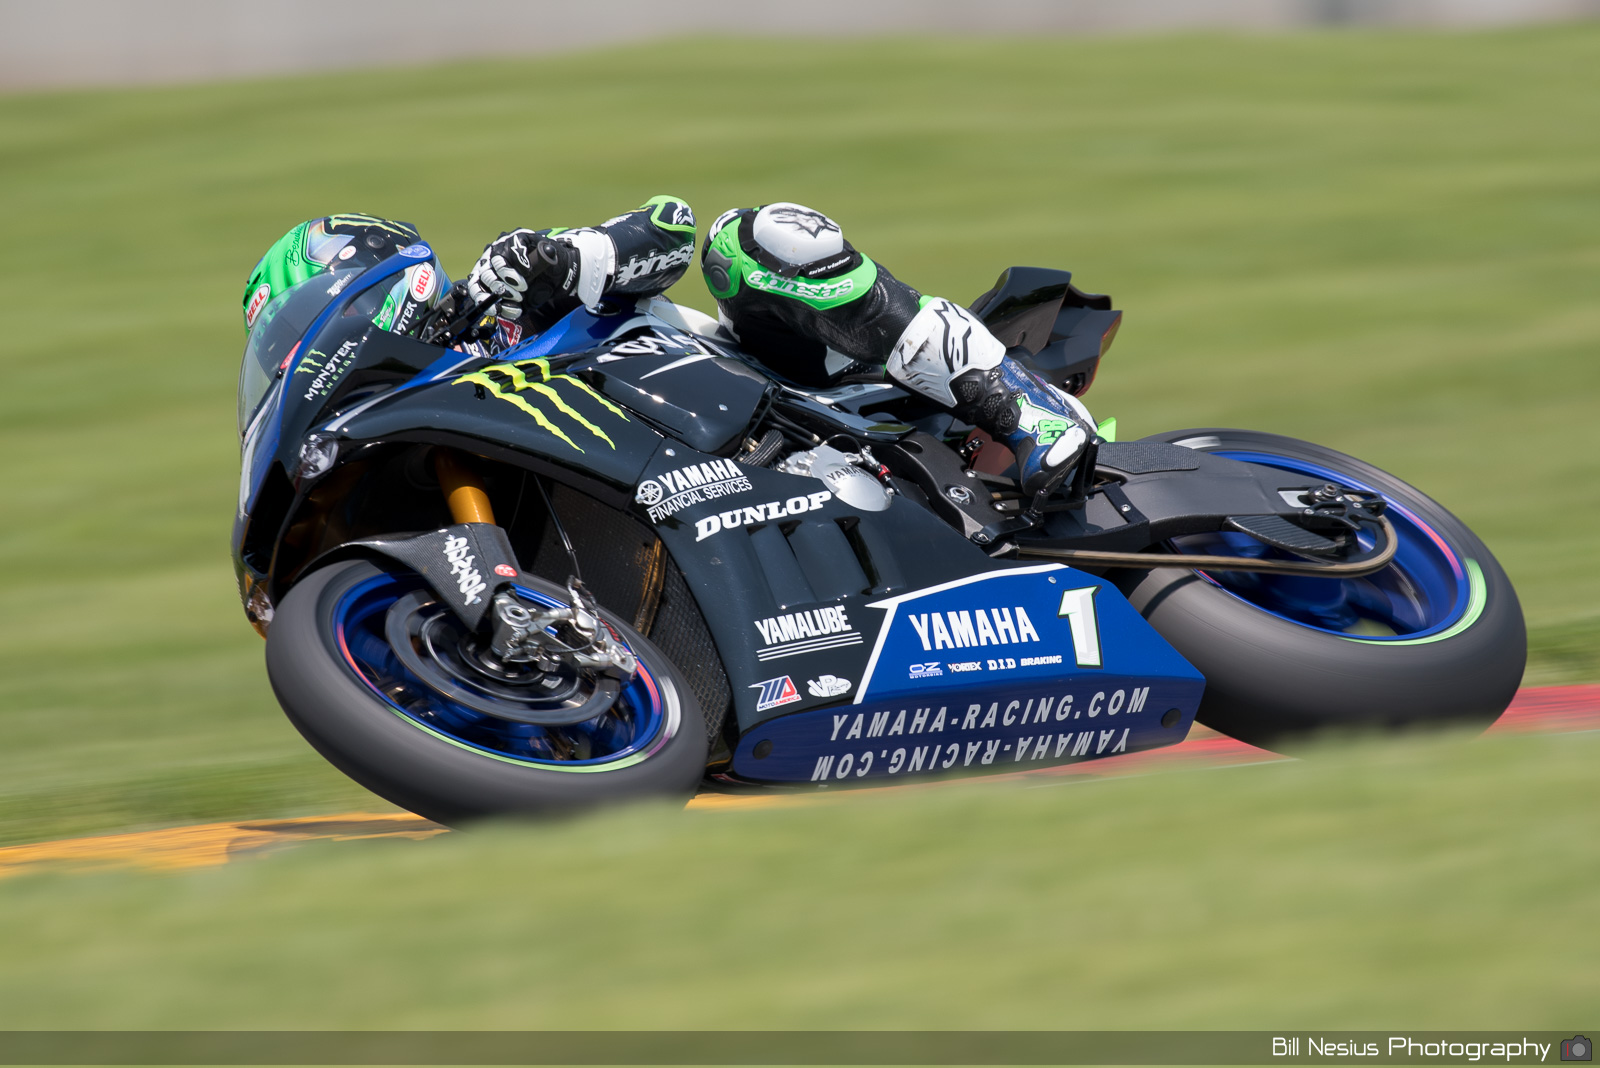 Cameron Beaubier on the Number 1 Monster Energy Yamaha Factory Racing Yamaha YZF-R1 / DSC_7271 / 